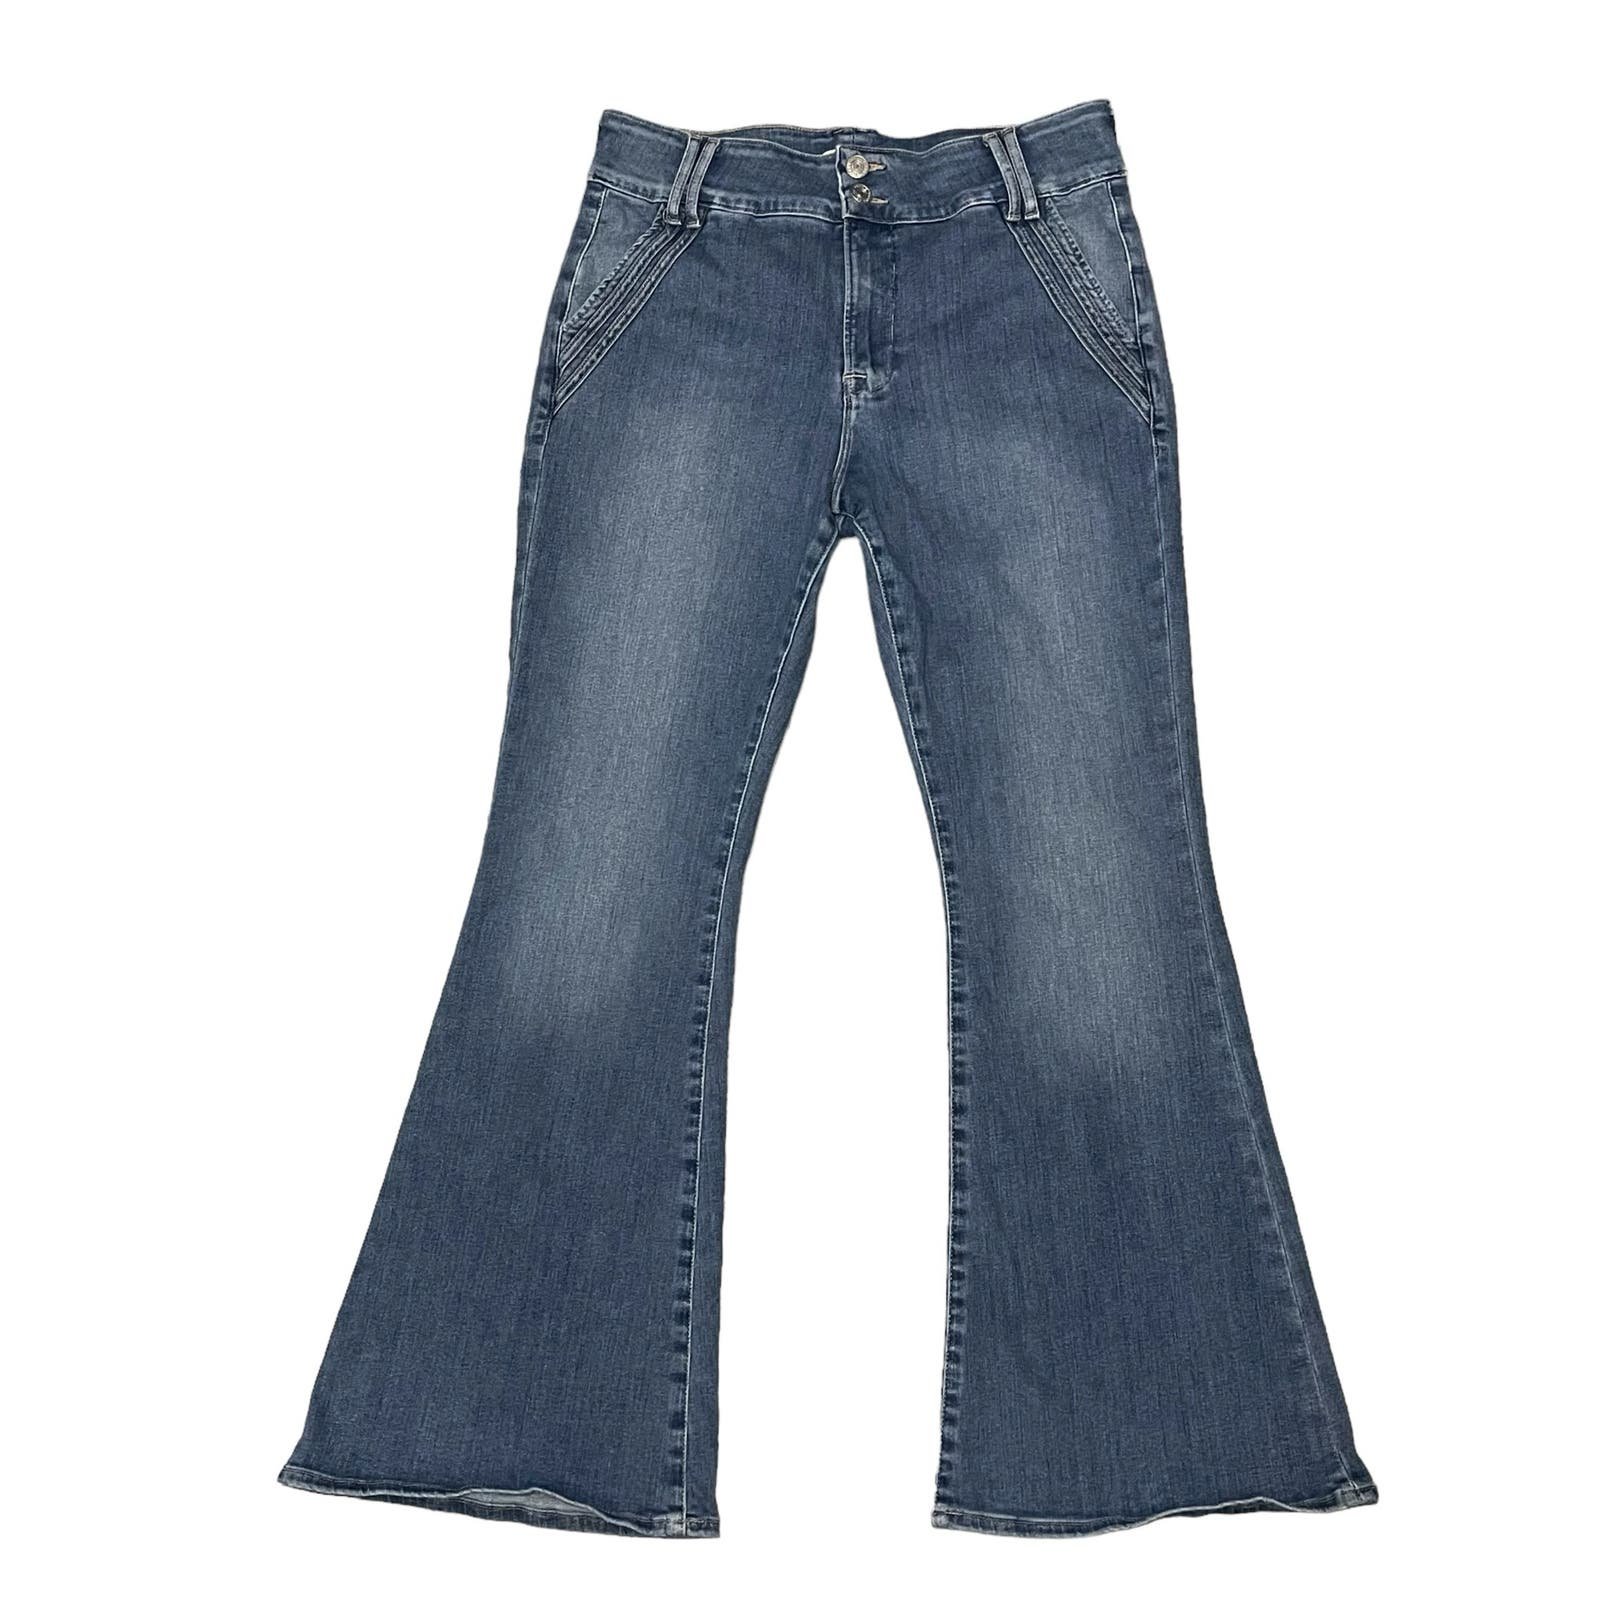 FRAME Denim Double Detail Flare Blue Jeans Merced High Waist Stretch - Size 31 a90lYM2sb